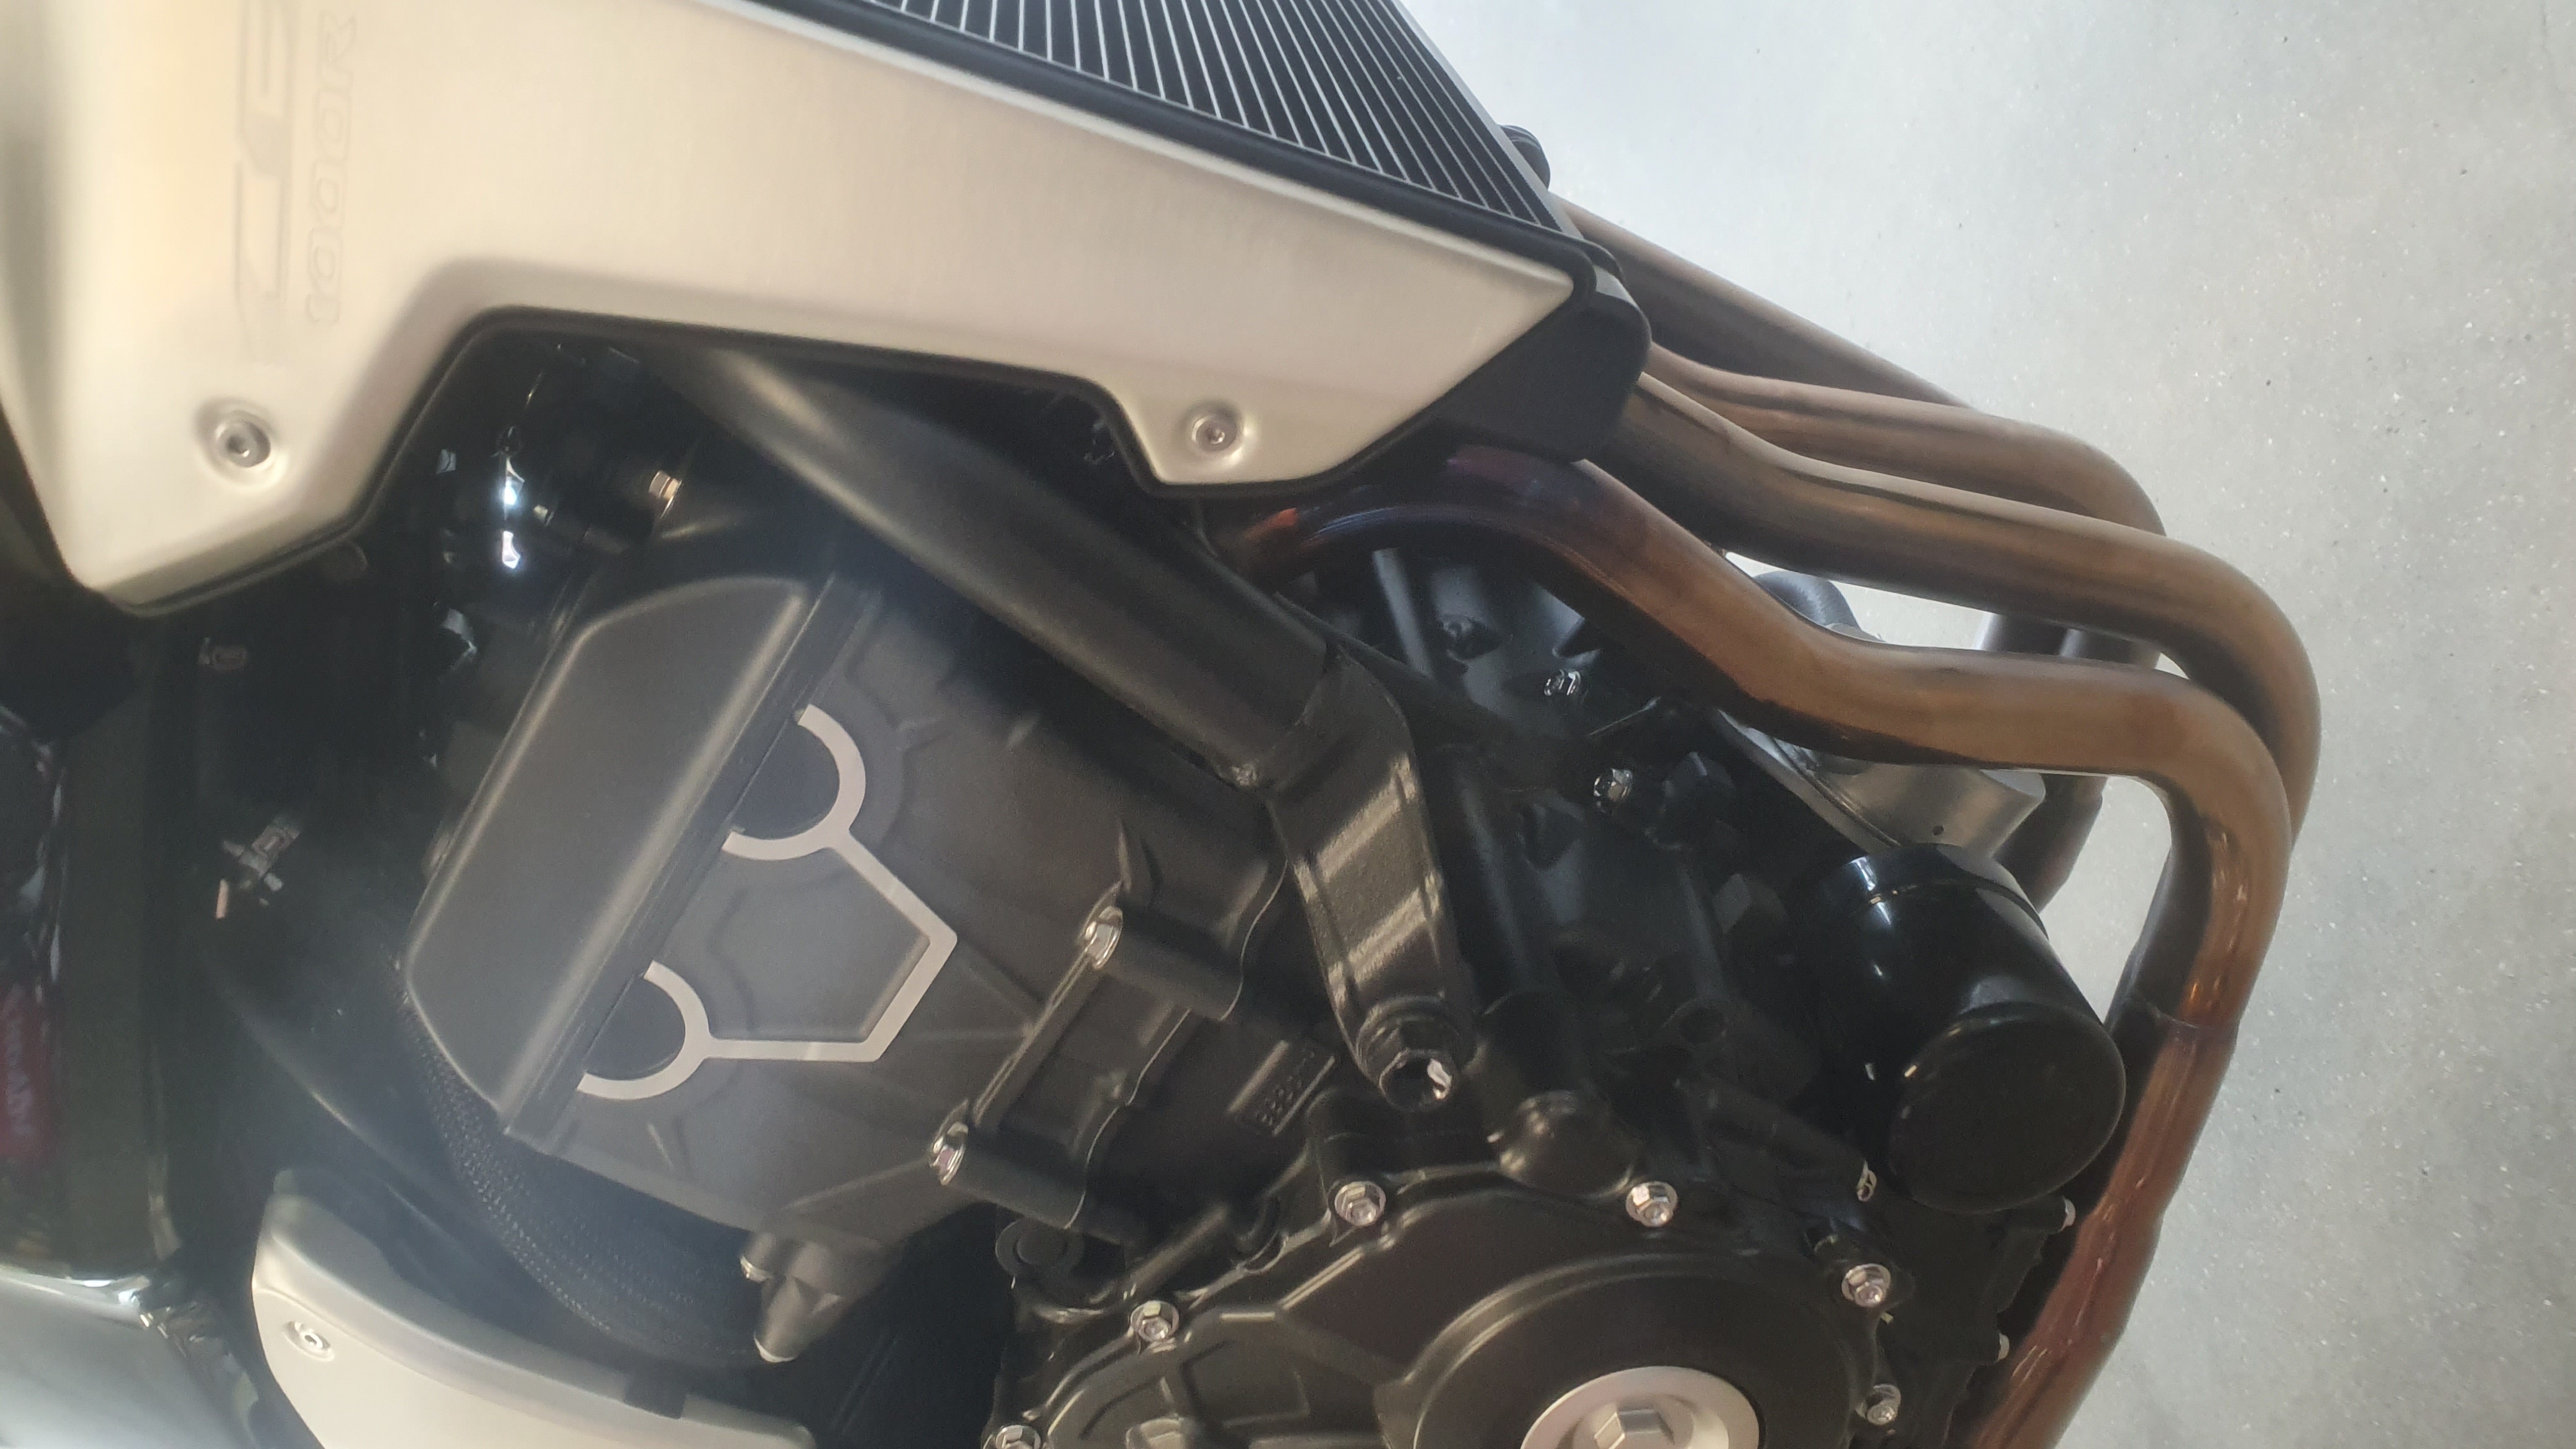 2019 Honda CB1000R Motorcycle Image 17